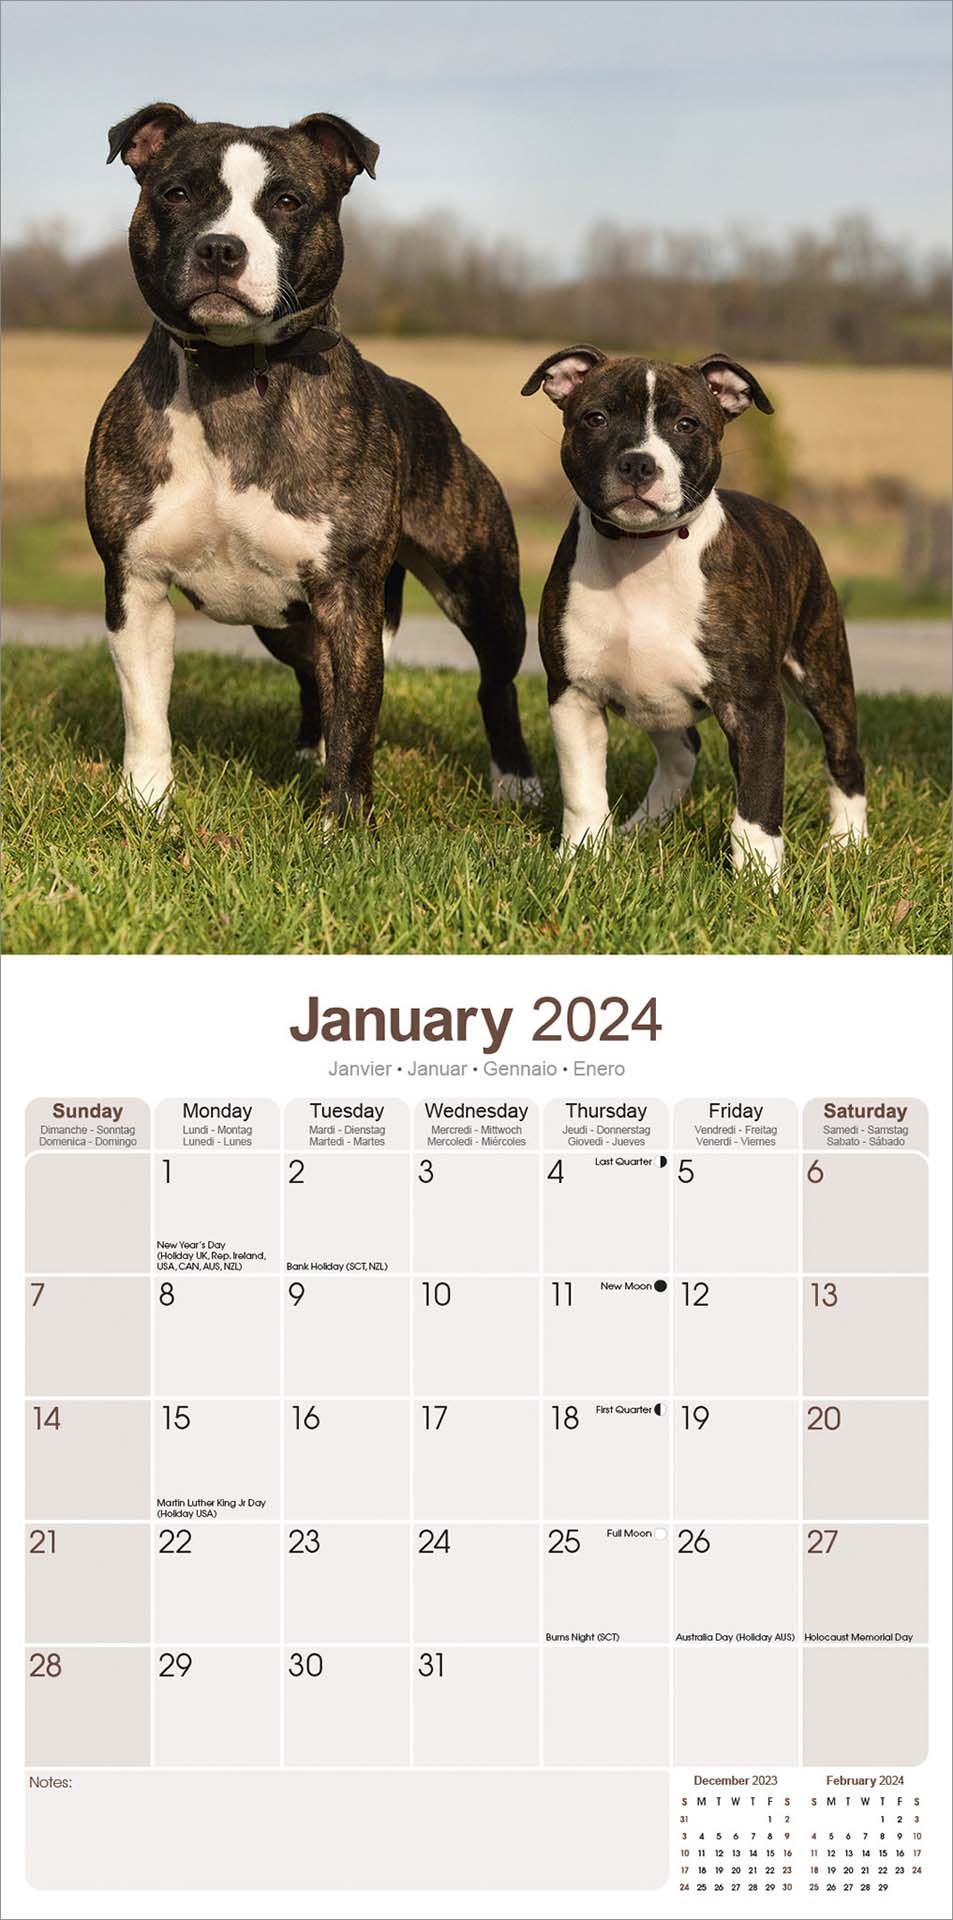 Staffordshire Bull Terrier Square Wall Calendar 2024